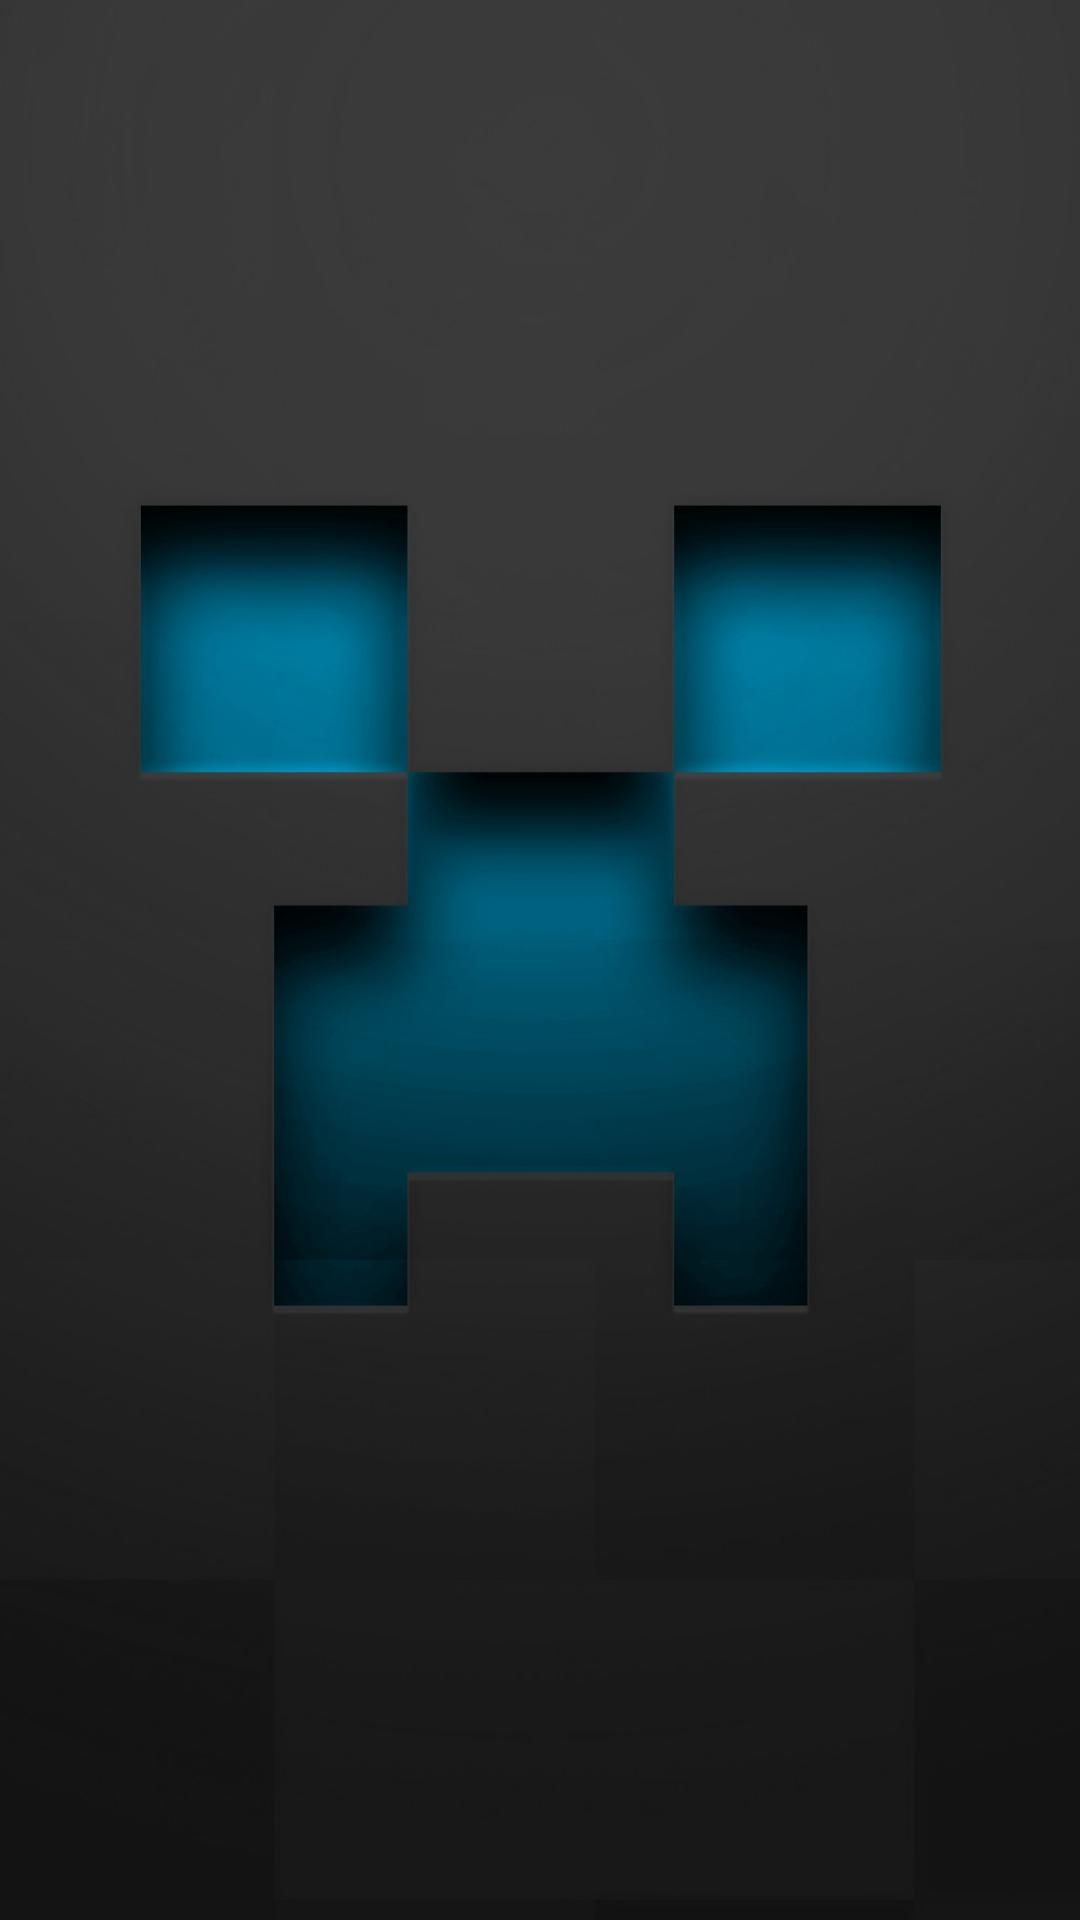 Minecraft blue creeper gray pixelart wallpaper. Wallpaper de minecraft, Creeper de minecraft, Fondos de pantalla minecraft